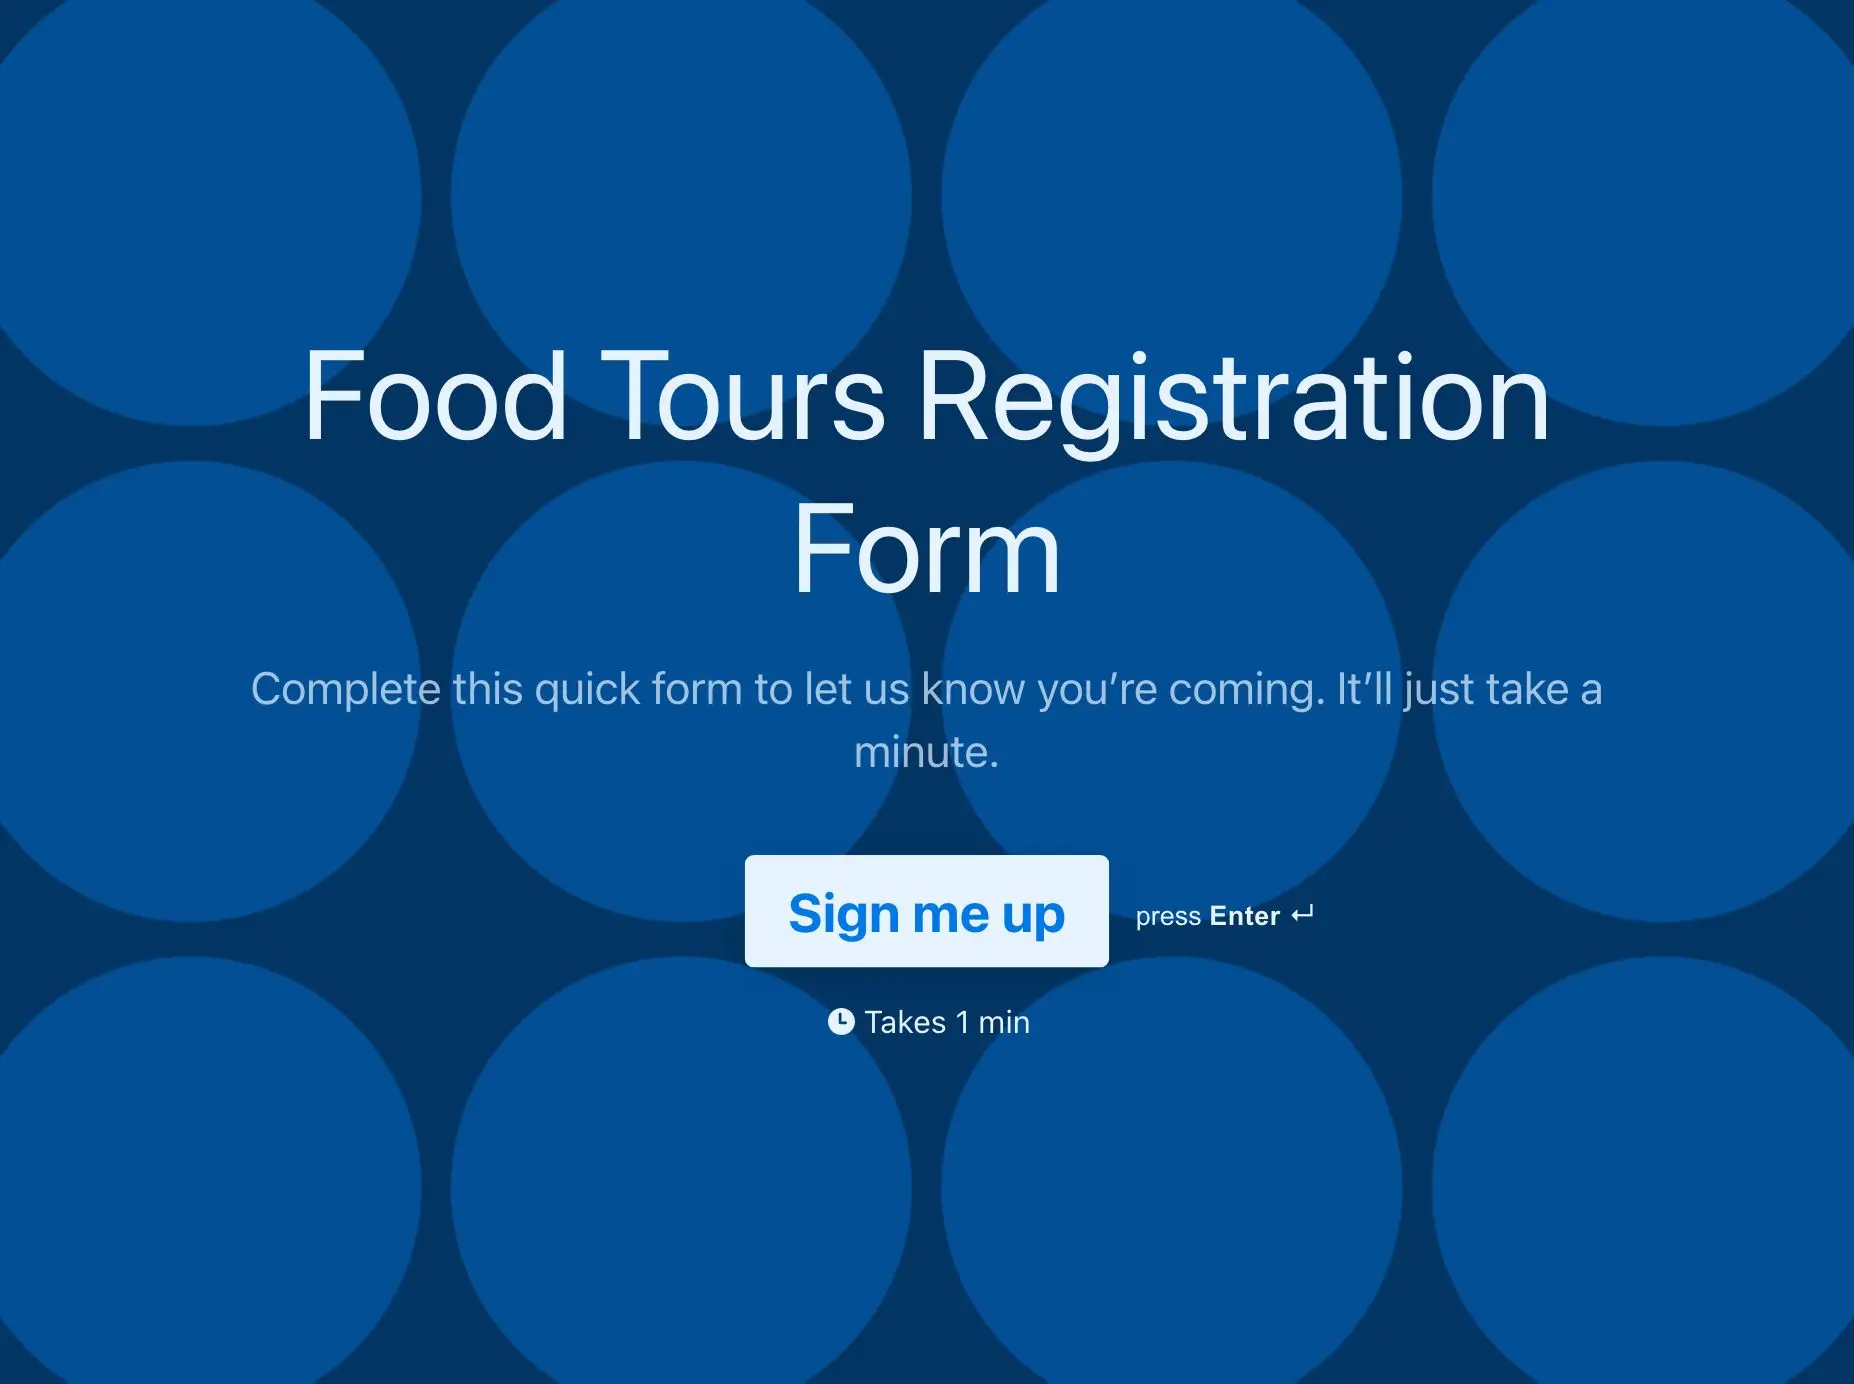 Food Tours Registration Form Template Hero